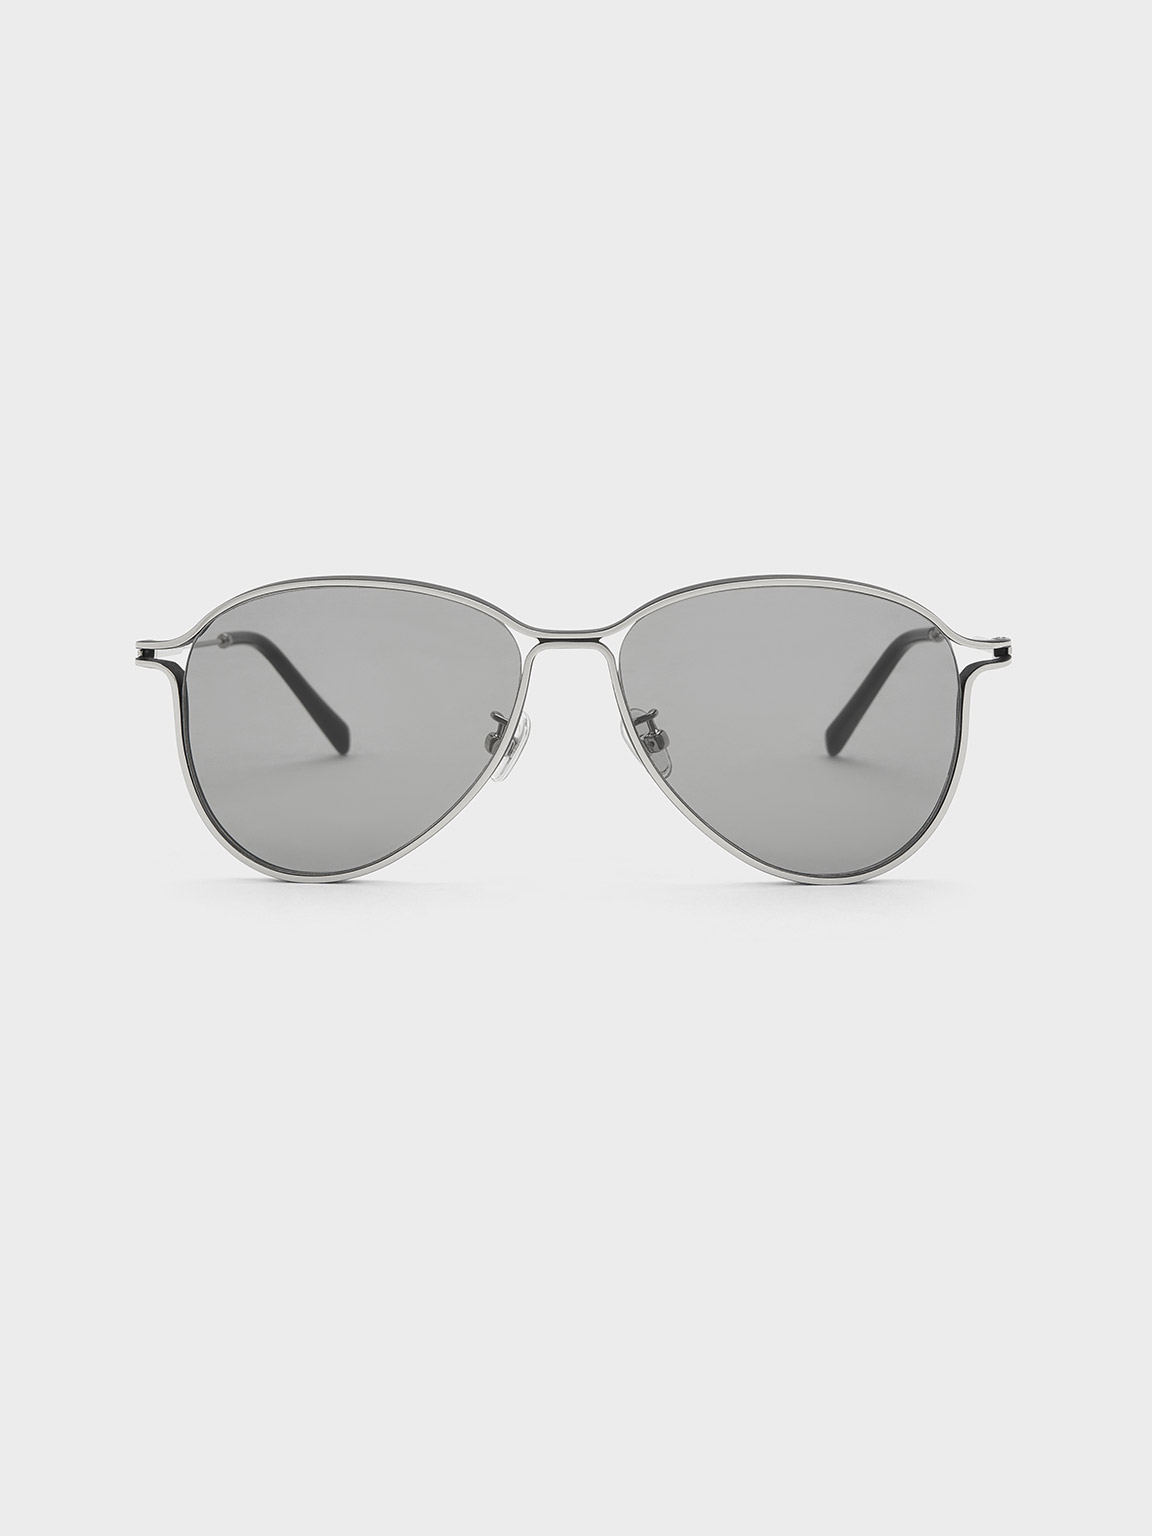 Charles & Keith Metallic Accent Aviator Sunglasses In Gray